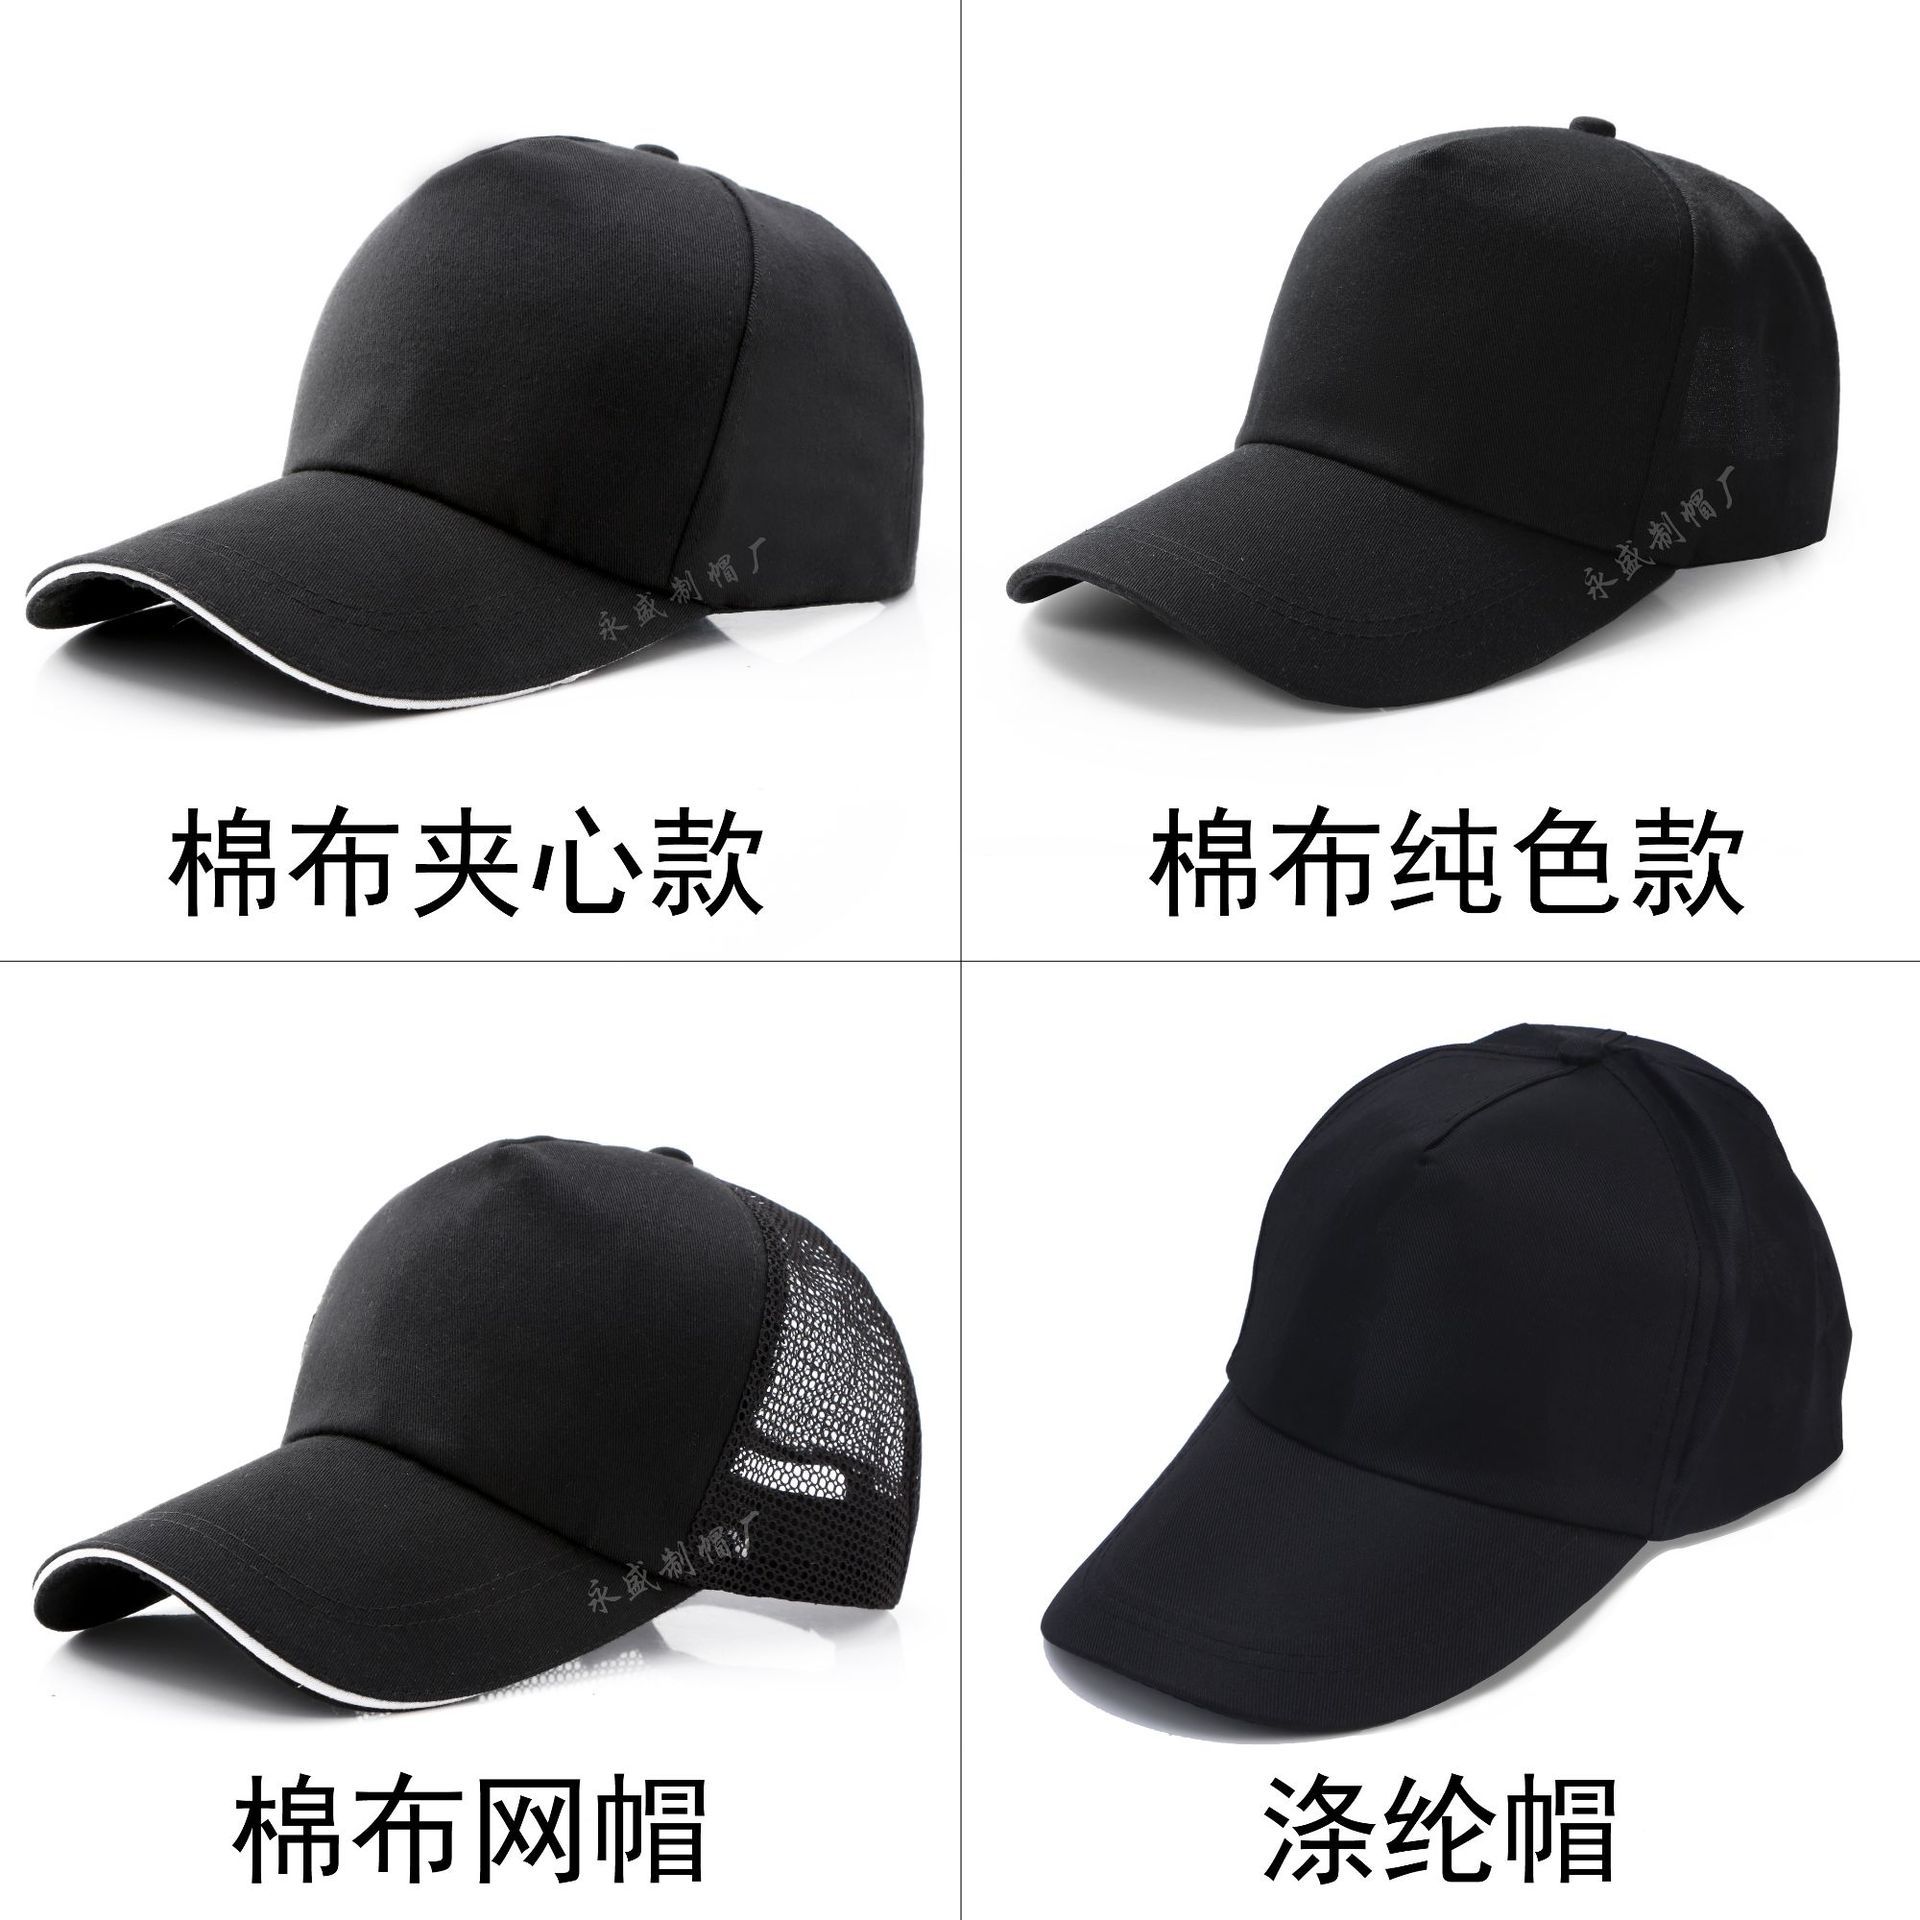 Cotton Hat Customized Logo Advertising Cap Printing Baseball Cap Wholesale Mesh Cap Sun Protection Sun Hat Travel Cap Peaked Cap